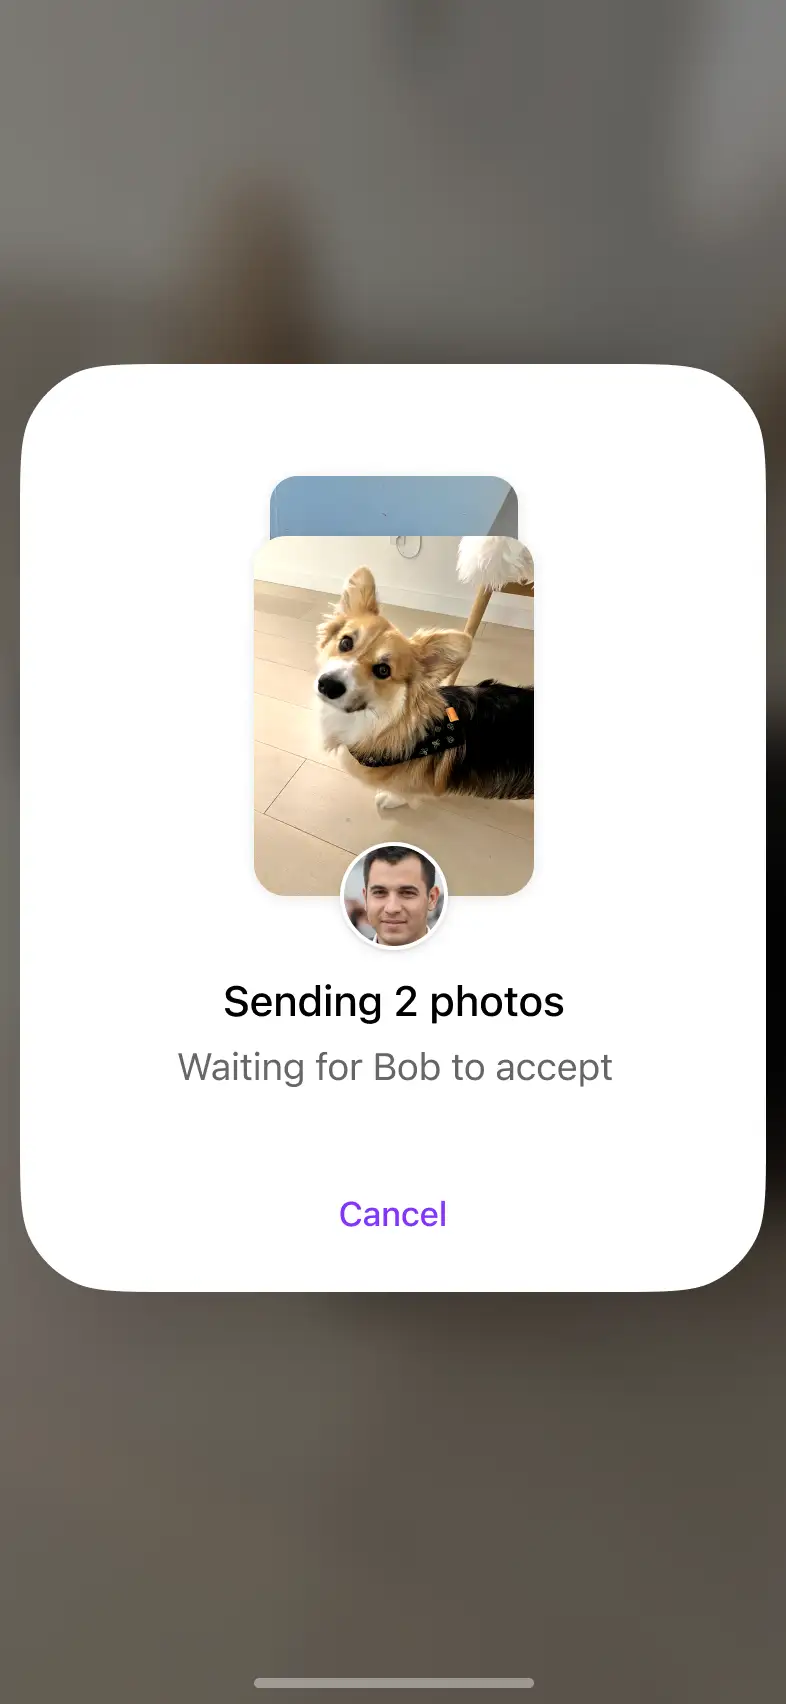 An iPhone showing: 'Sending 2 photos to Bob'